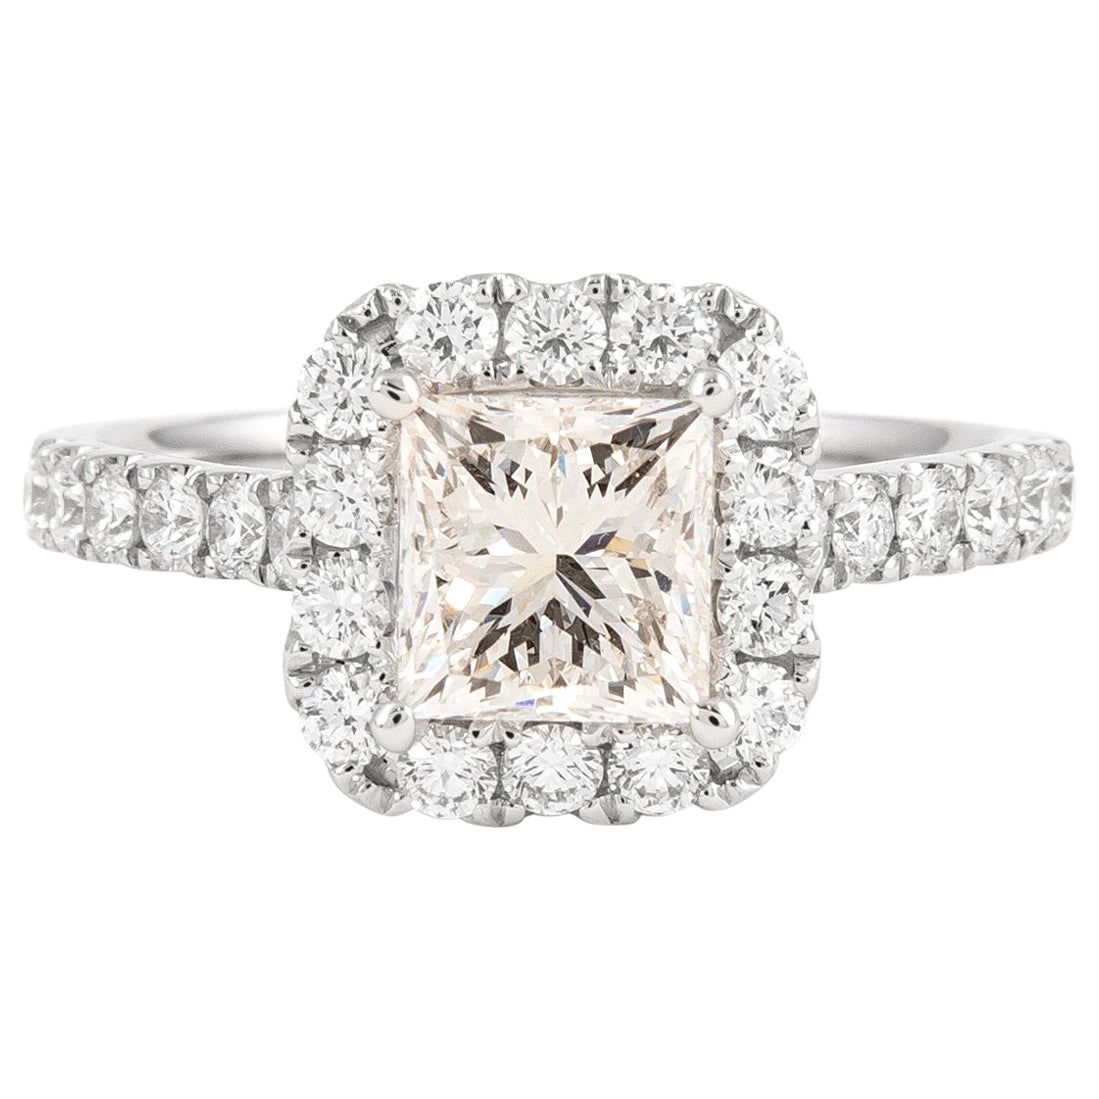 Alexander G VS1 1.30 Carat Princess Cut Diamond Ring 18k White Gold For Sale